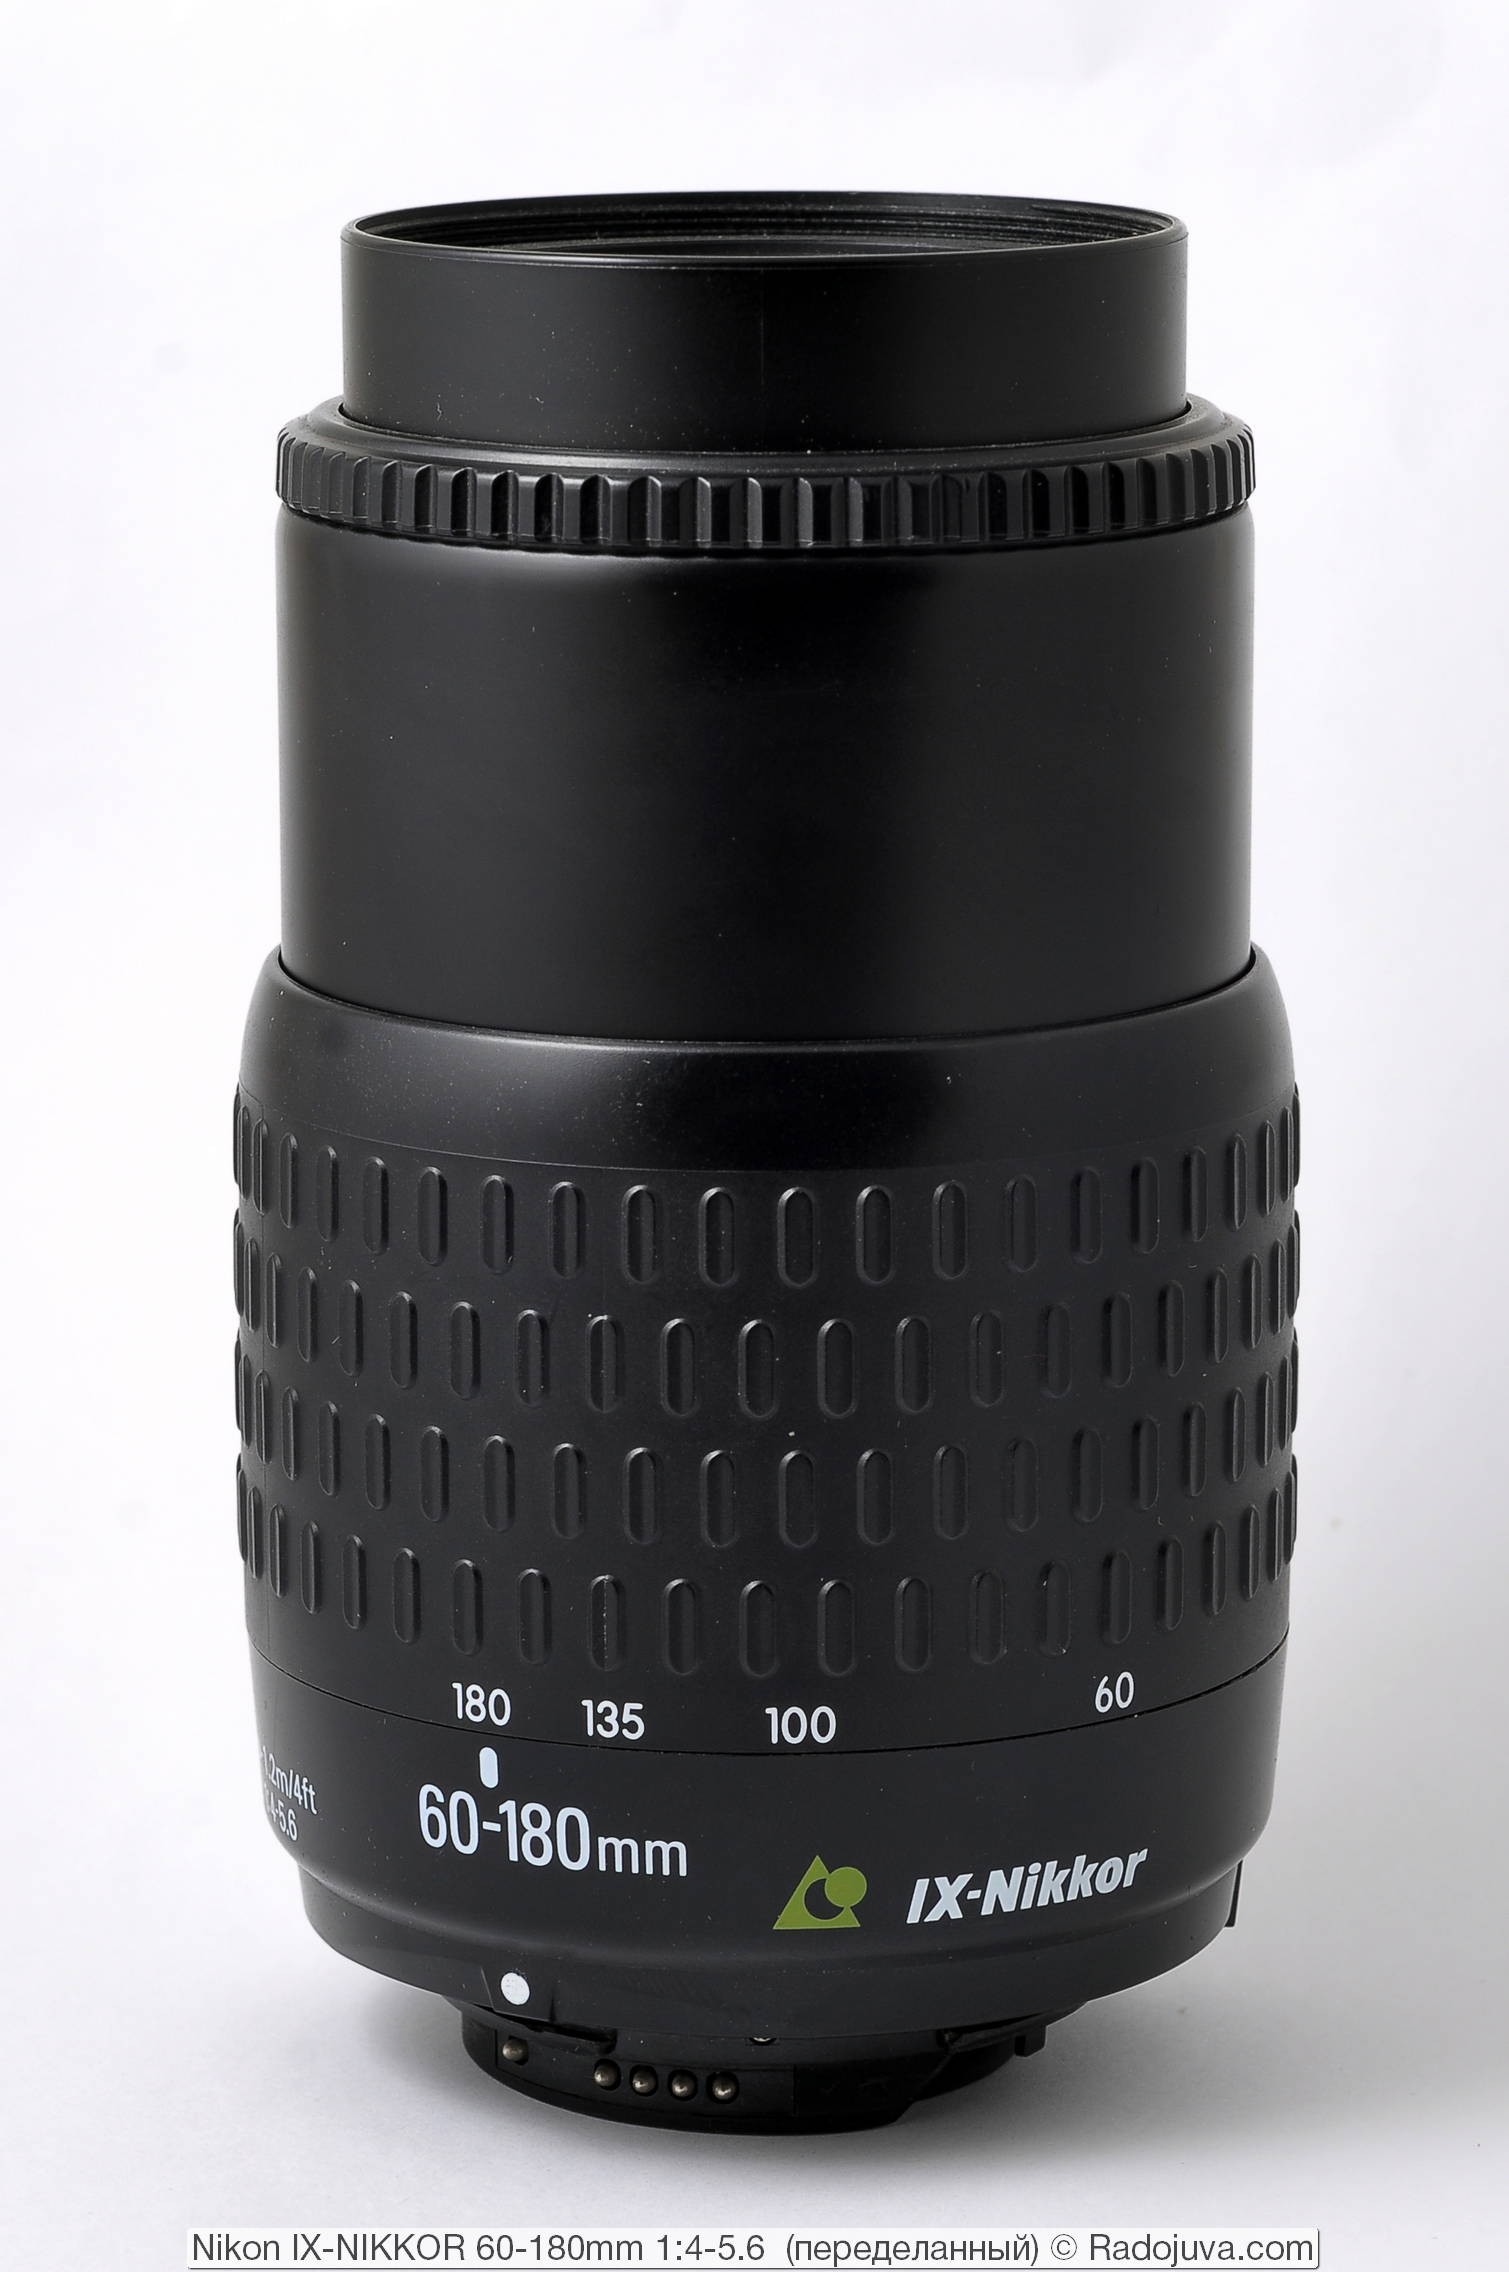 Nikon IX-NIKKOR 60-180mm 1: 4-5.6